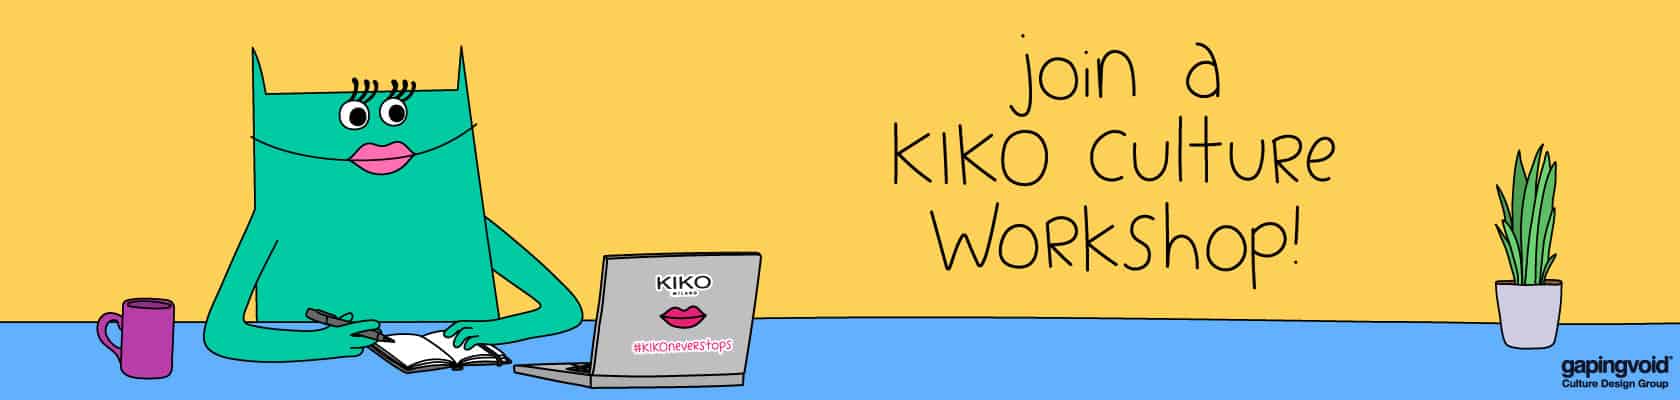 kiko-join-a-kiko-culture-workshop-banner